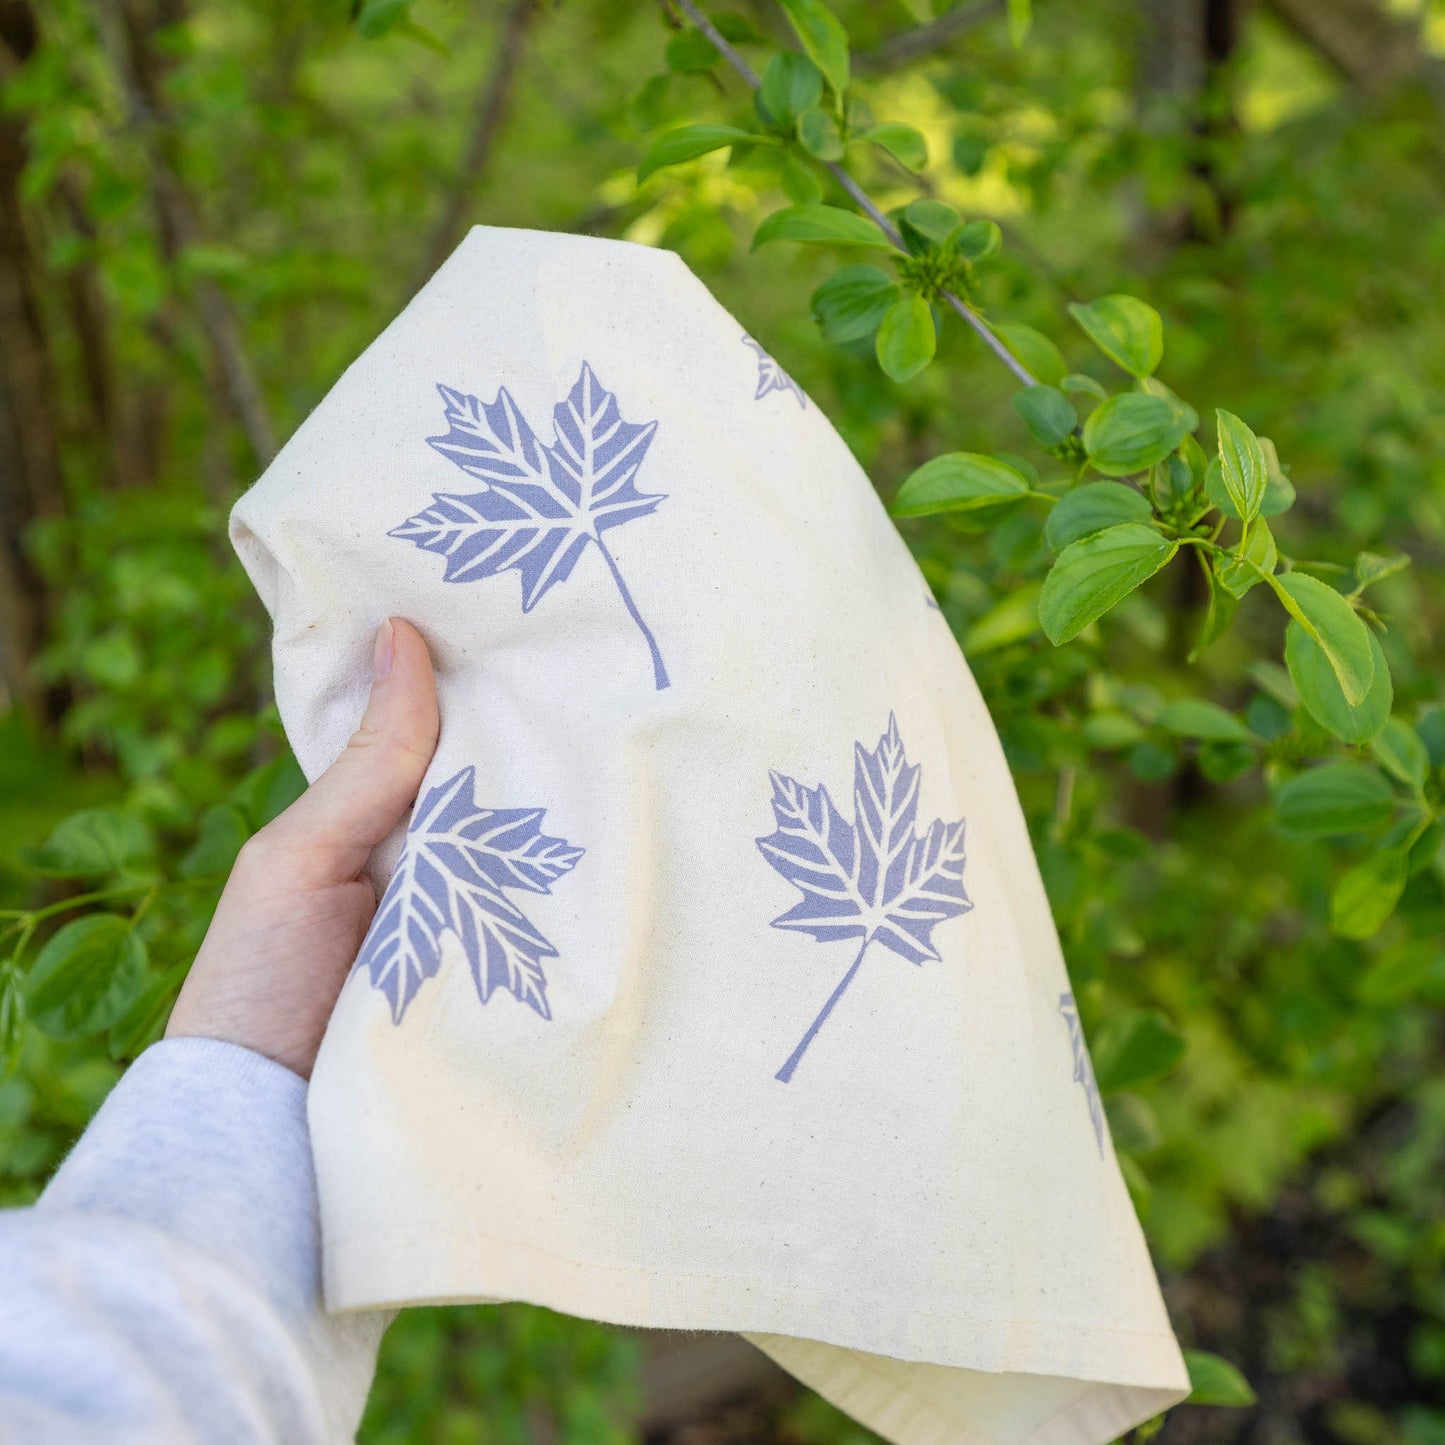 Hand holding a lavender maple leaf tea towel outside